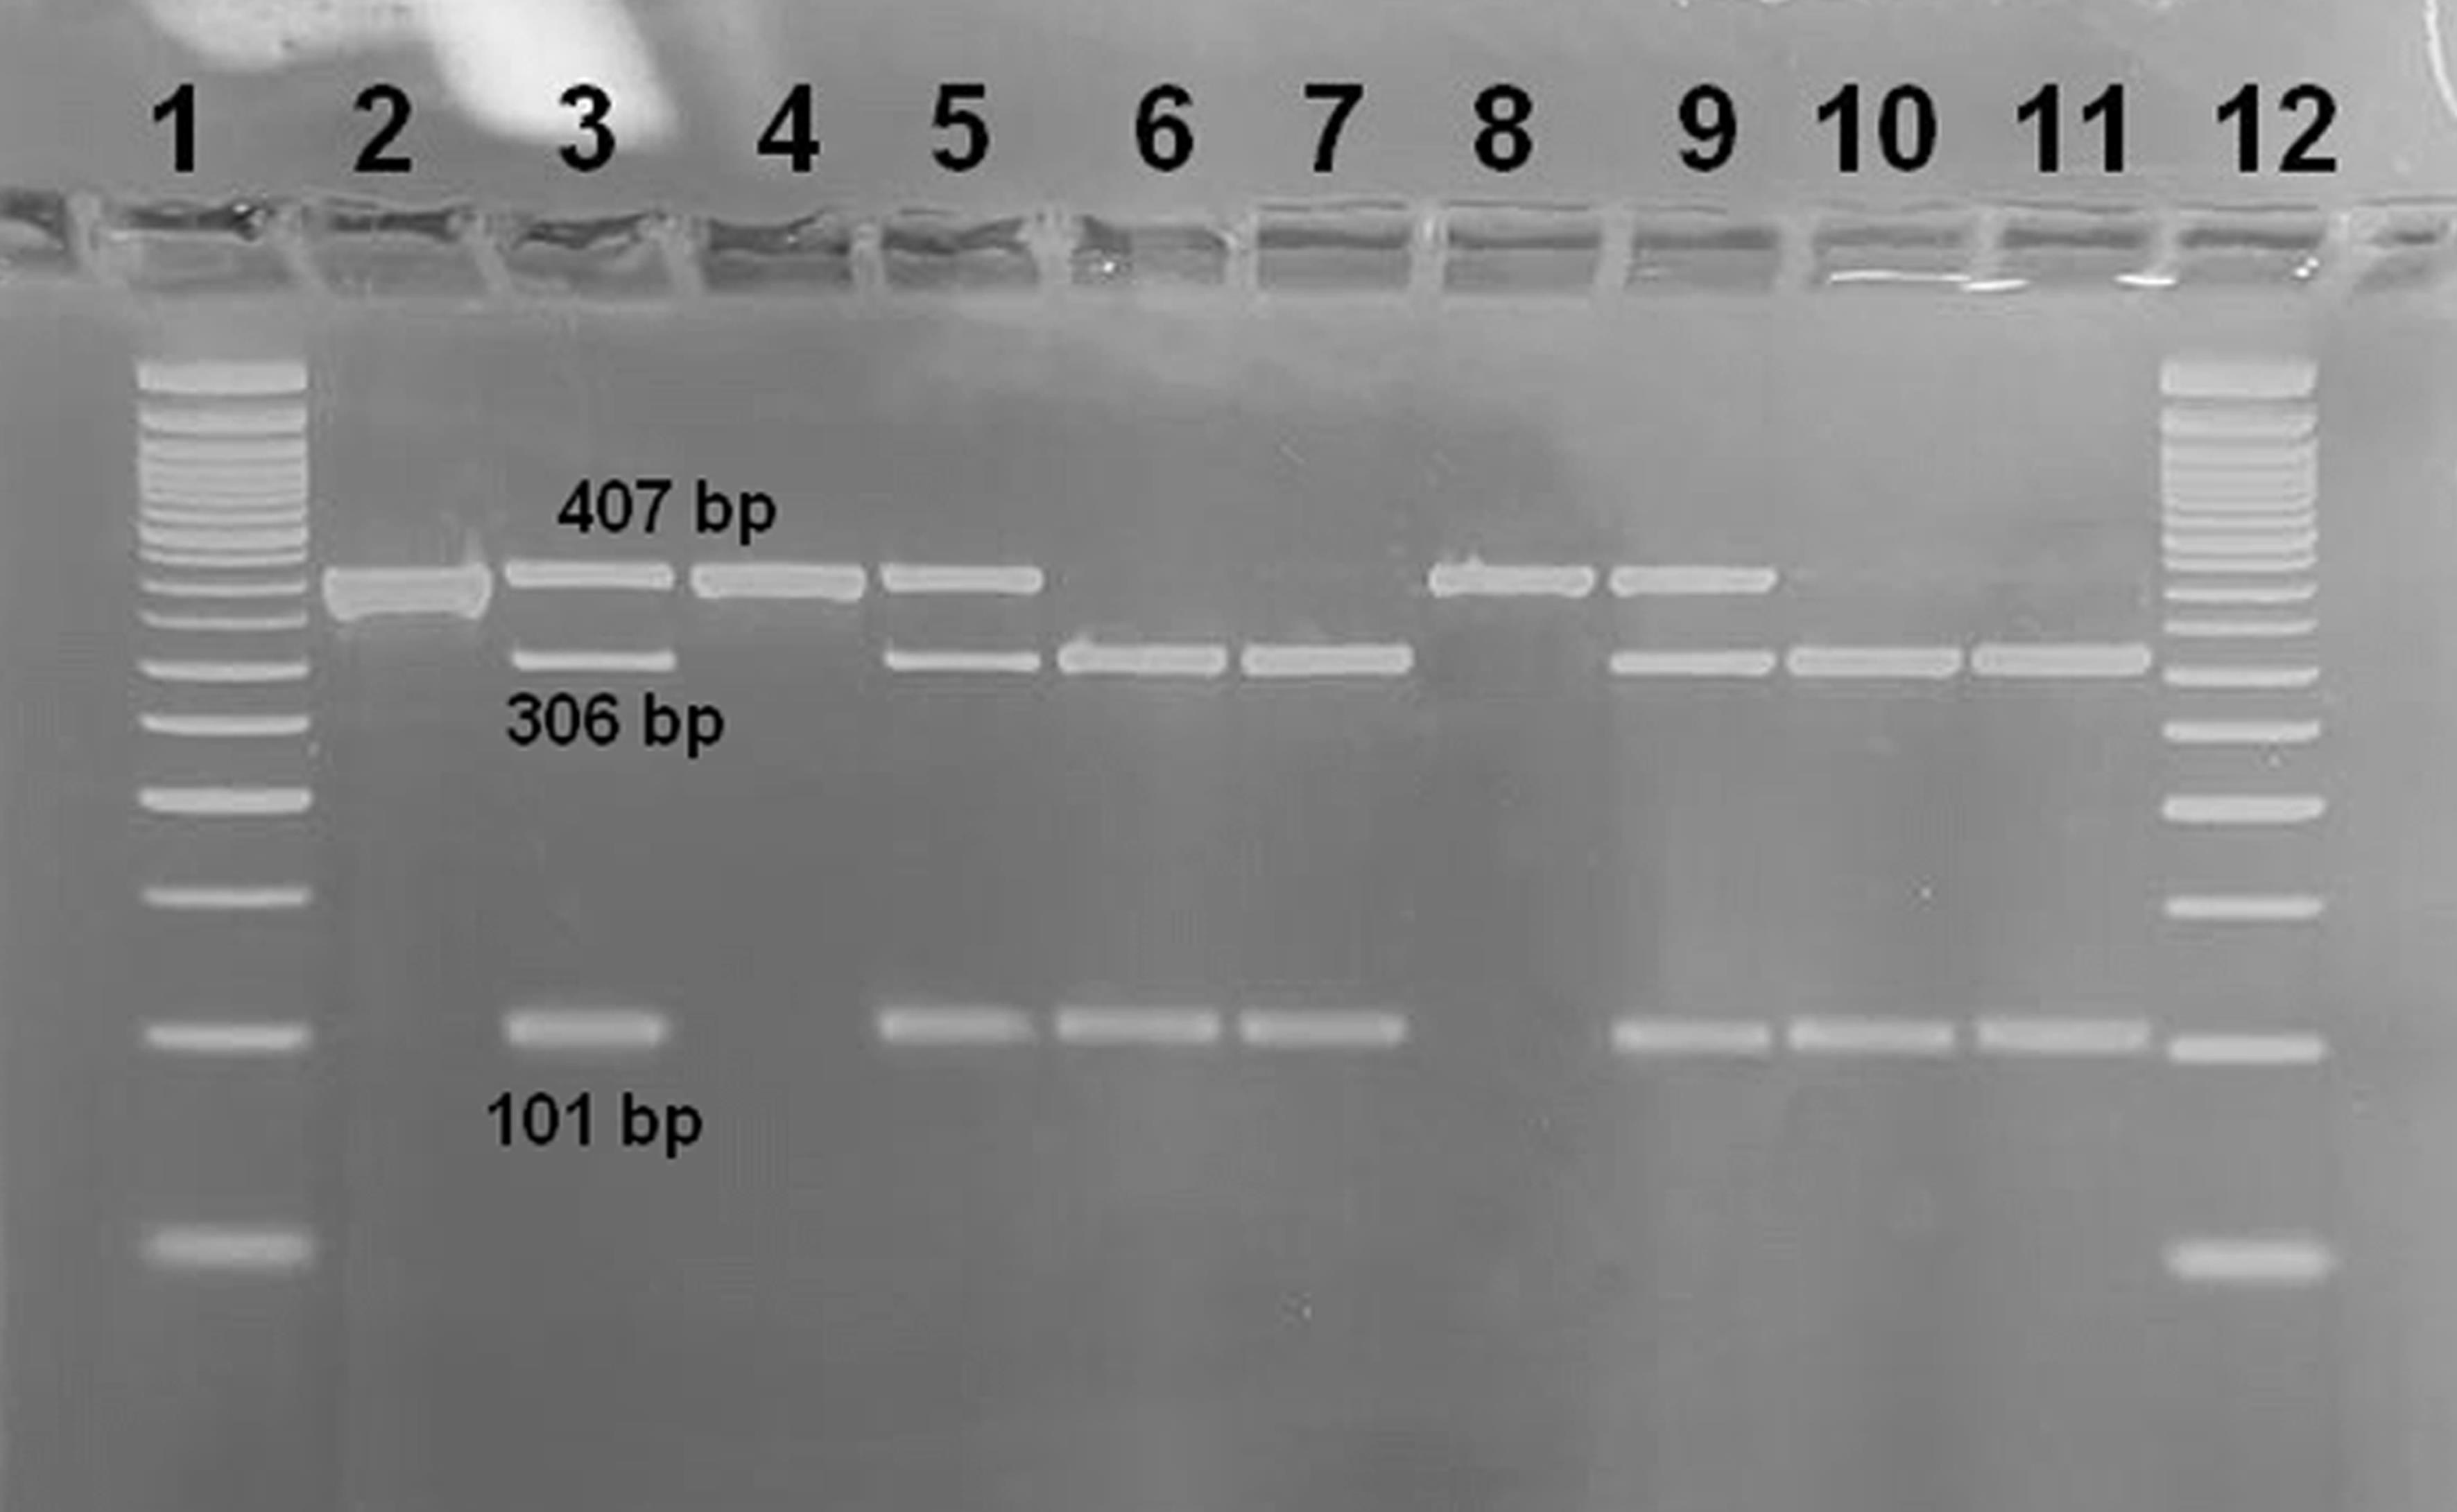 Agarose gel showing RFLP analysis of the <italic>TNFSF15 rs4979462</italic> variant.